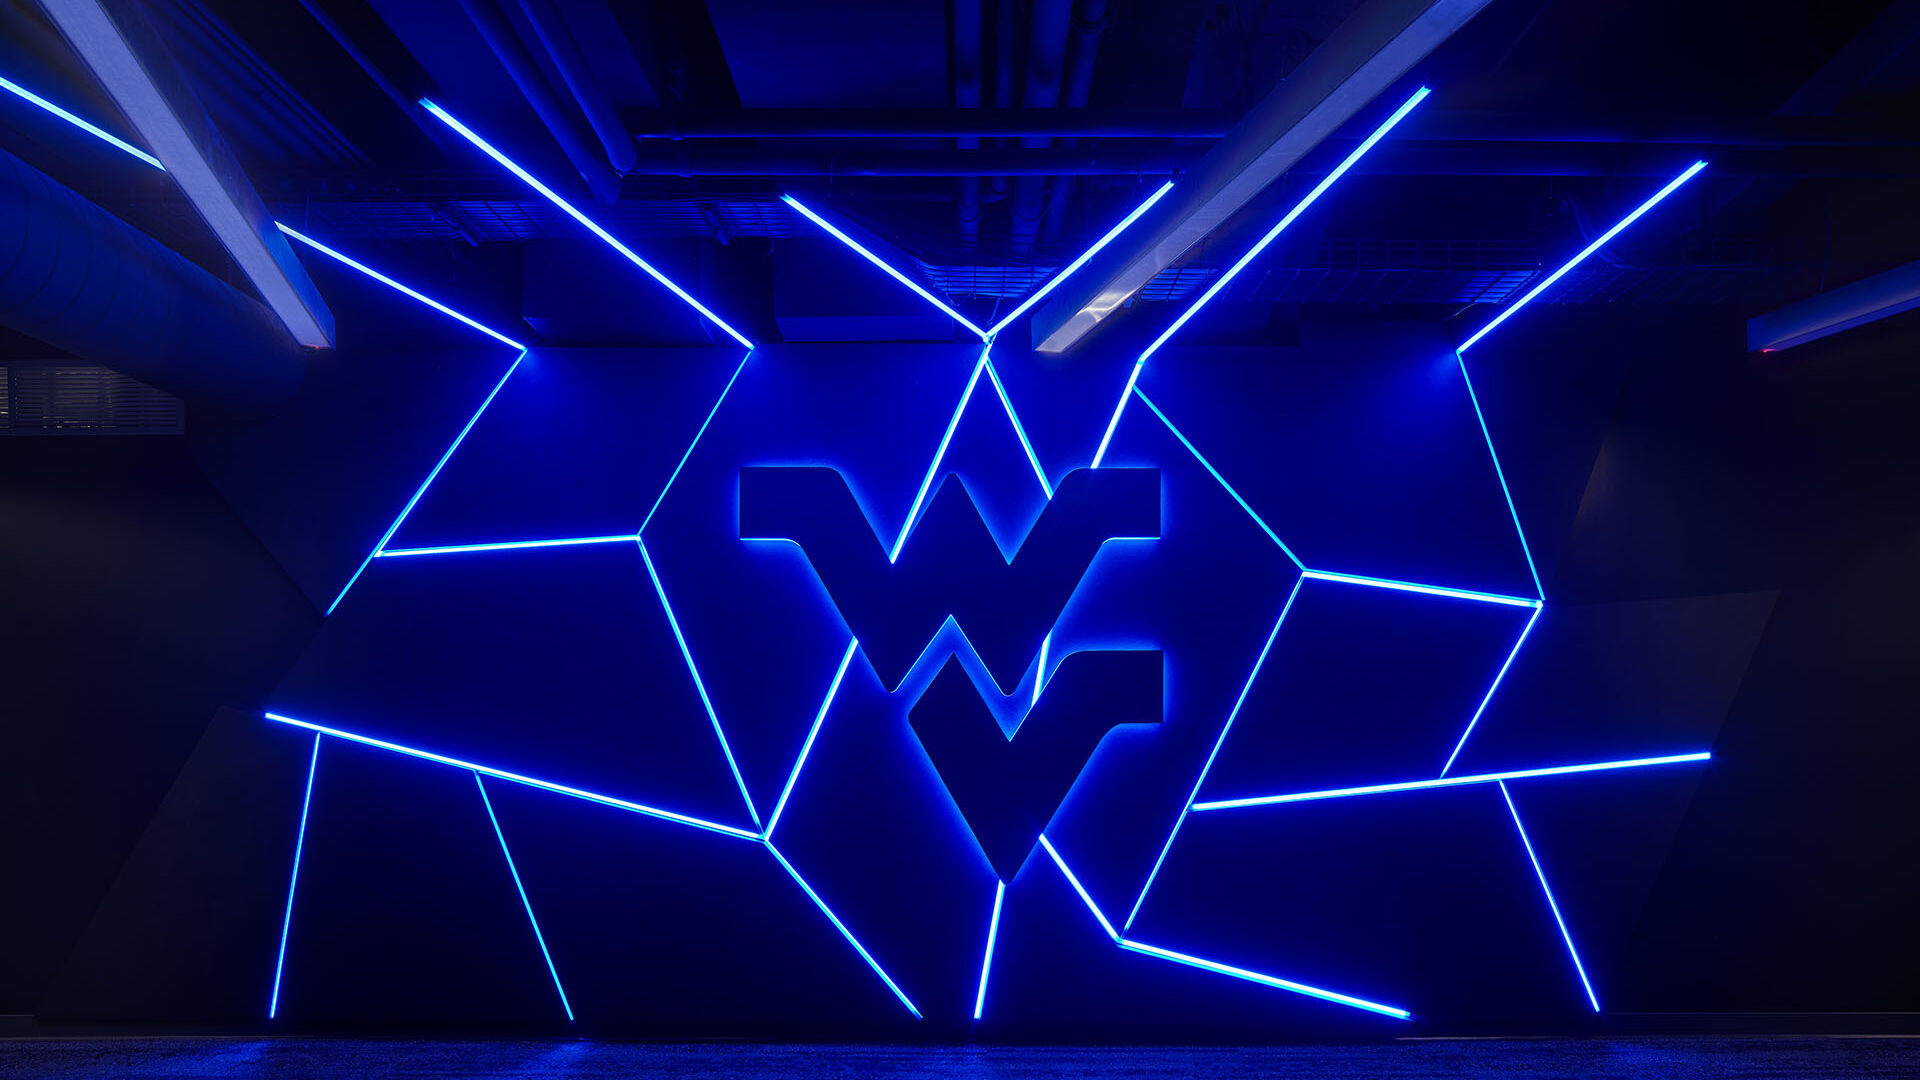 Milan Puskar Center Hype Wall with all blue lights on